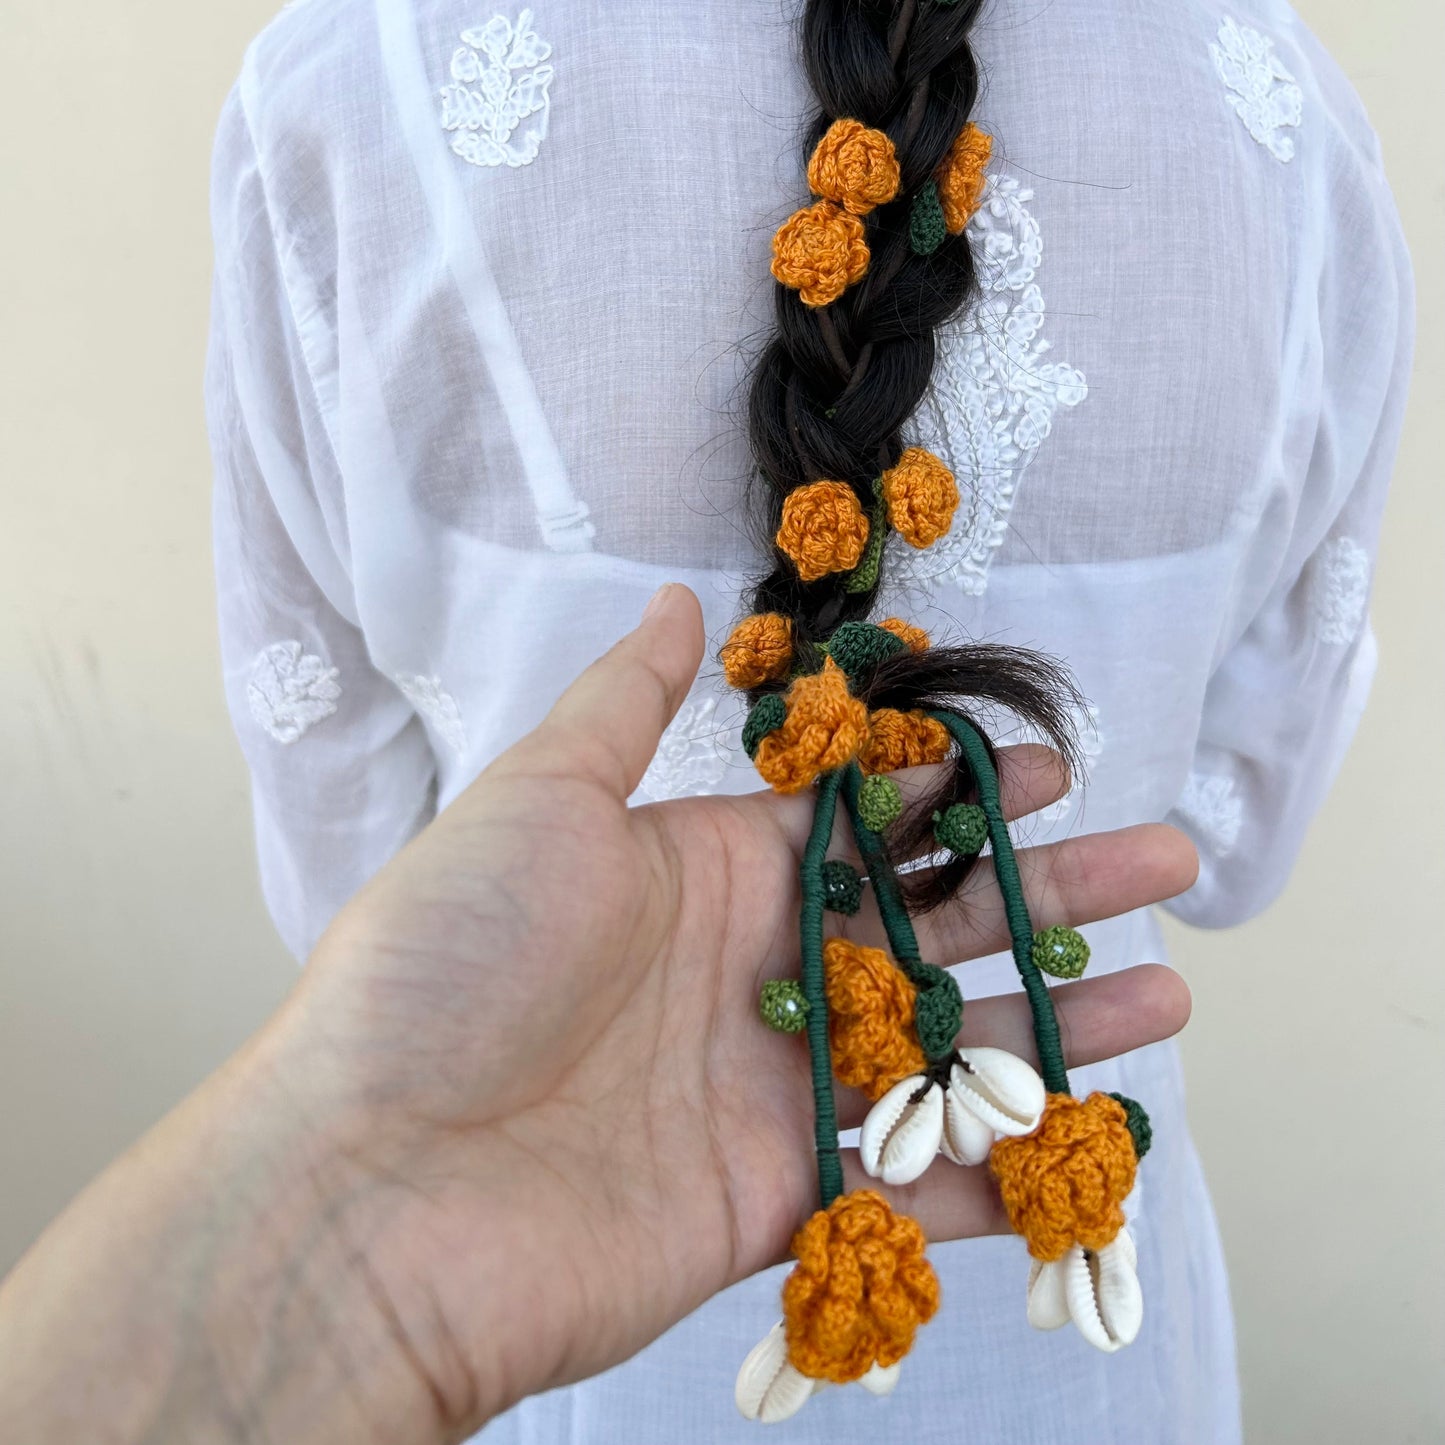 Orange Crochet Hair Parandi at Kamakhyaa by Ikriit'm. This item is Accessories, Cotton yarn, Crochet, Free Size, Hair Accessories, Ikriit'm, Natural, Orange